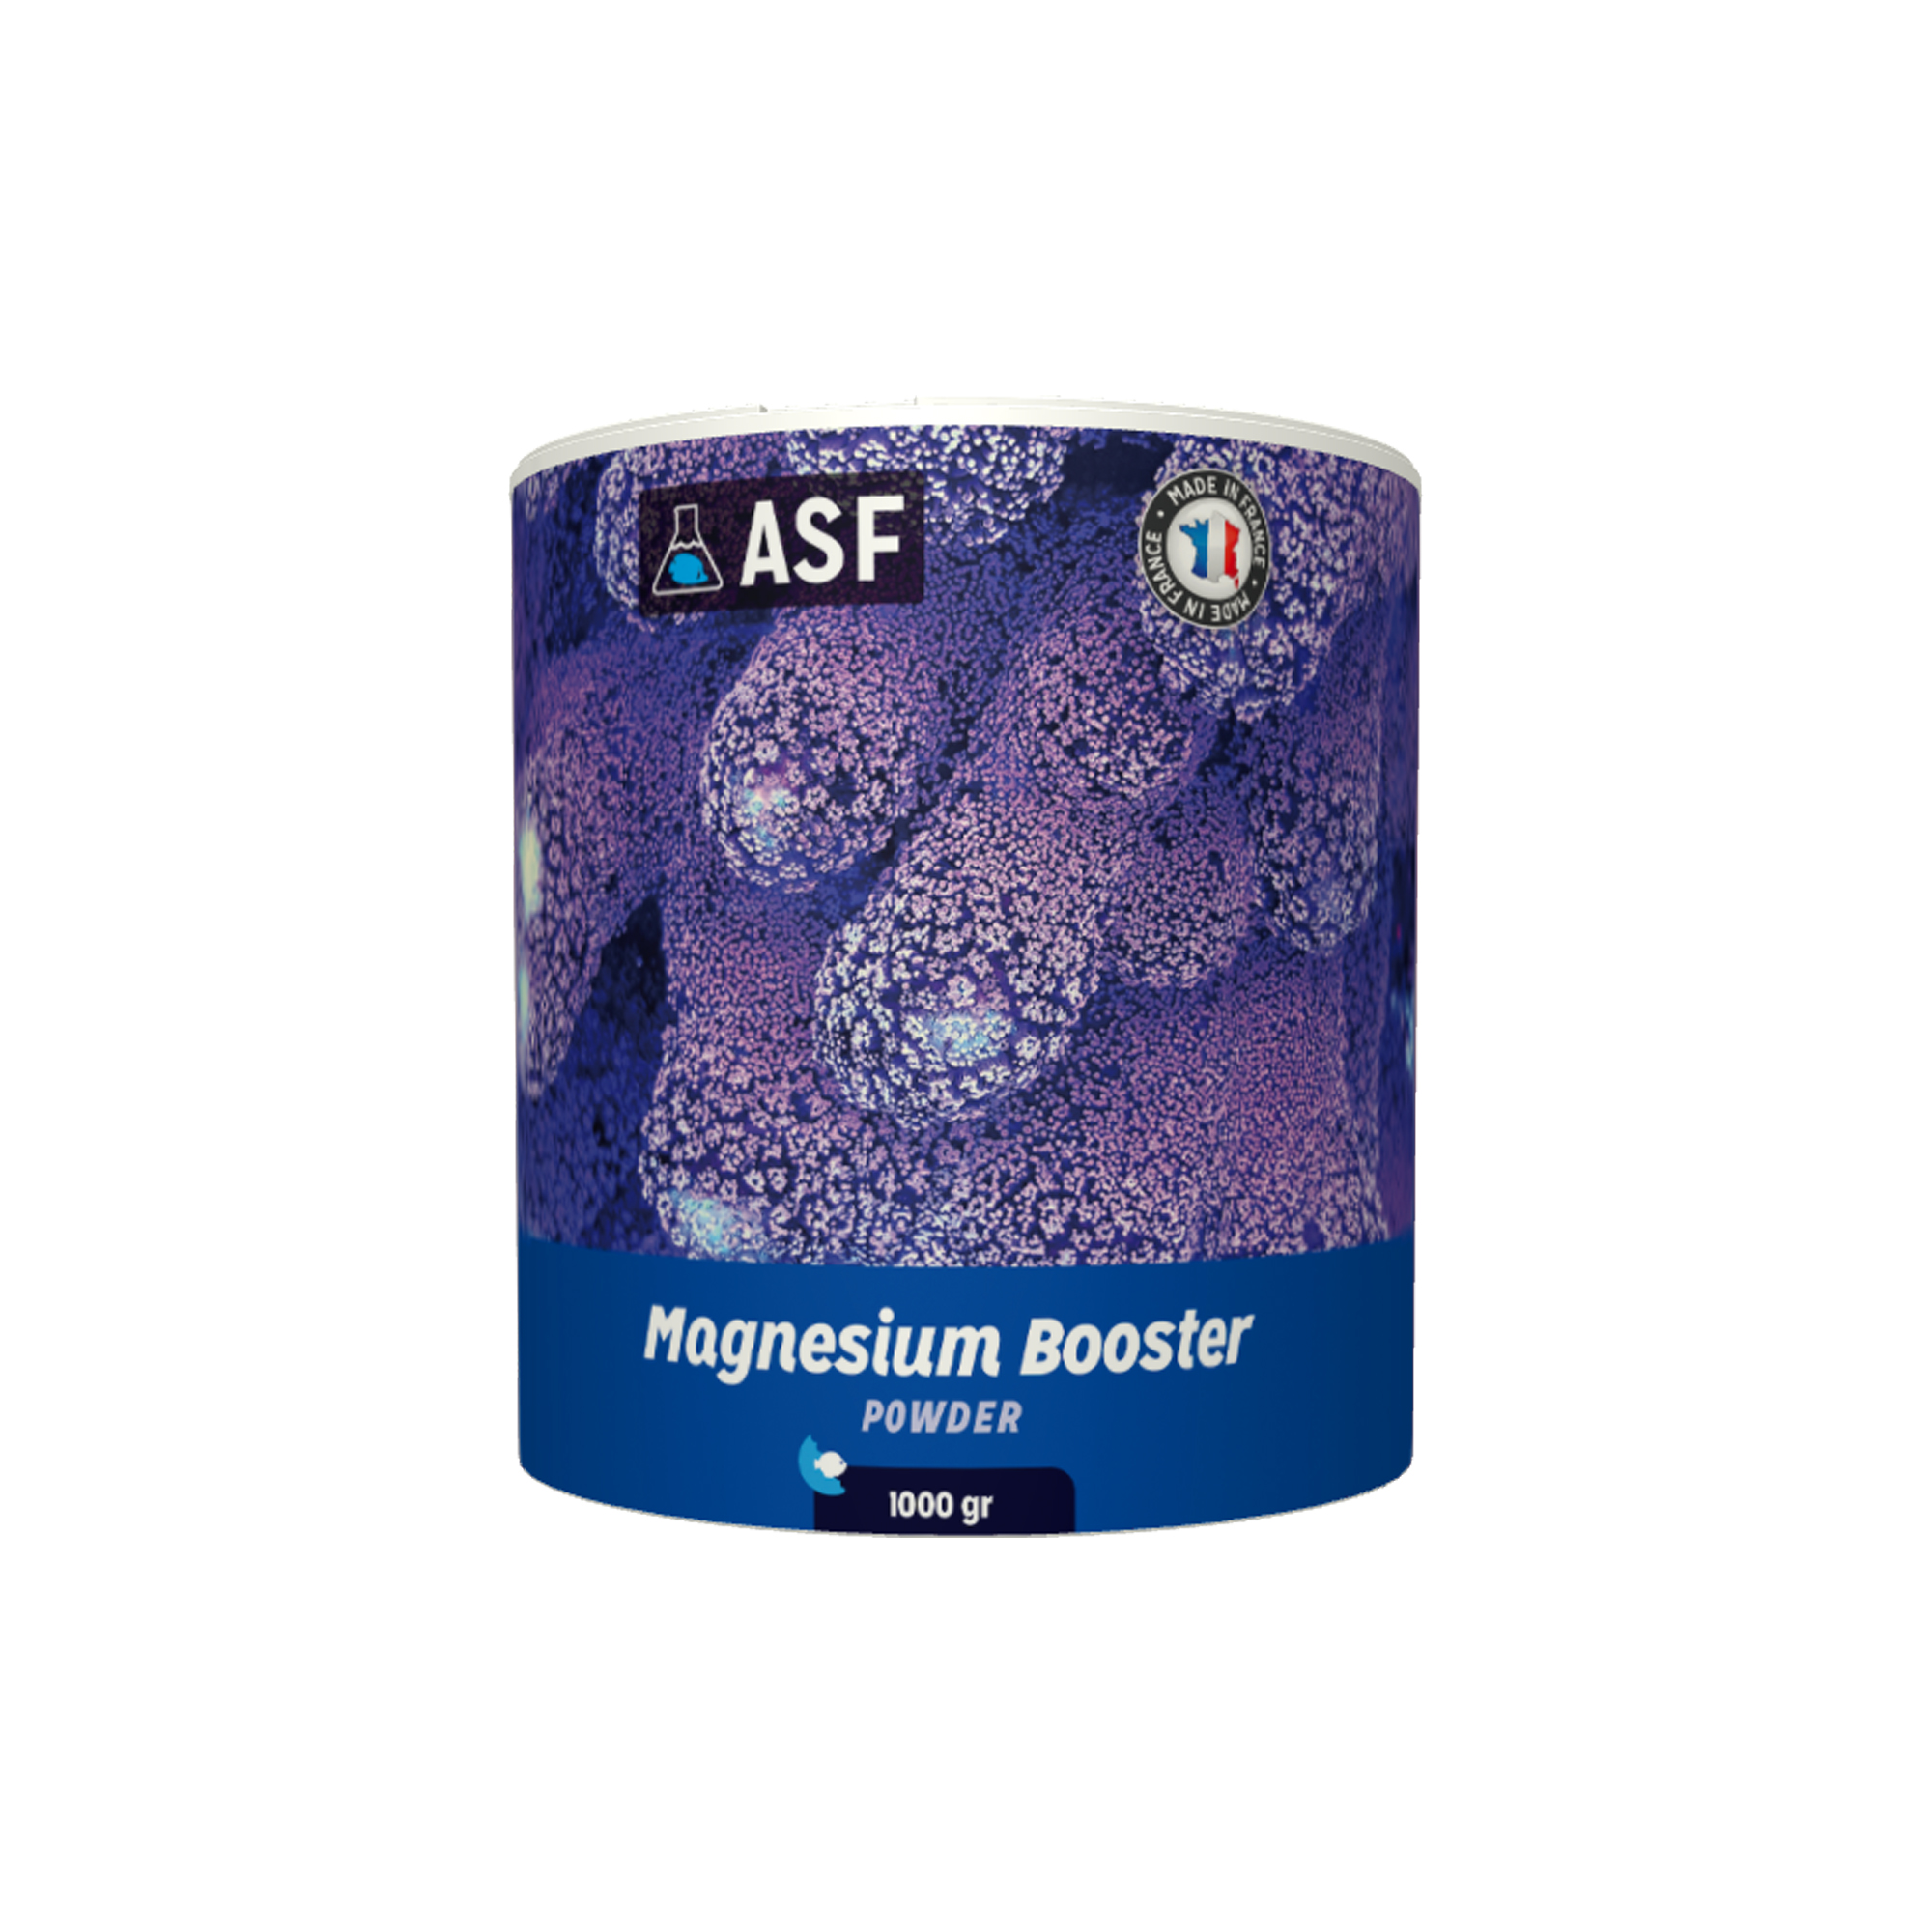 Magnesium Booster Powder UK